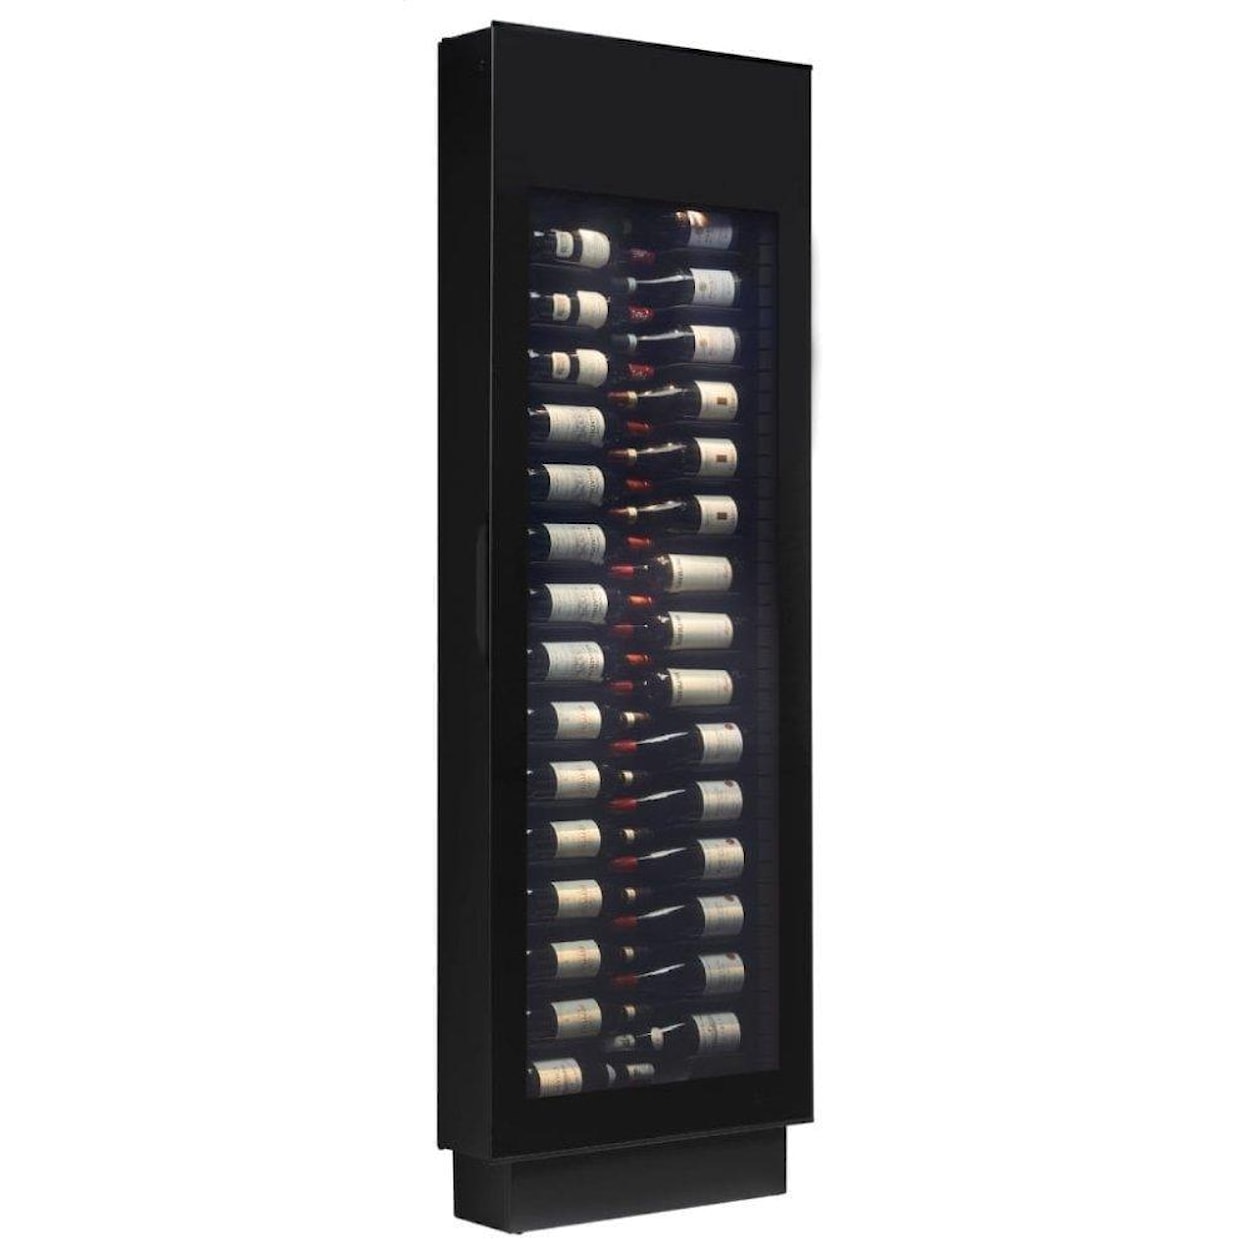 Silhouette Refrigerators Wine Coolers